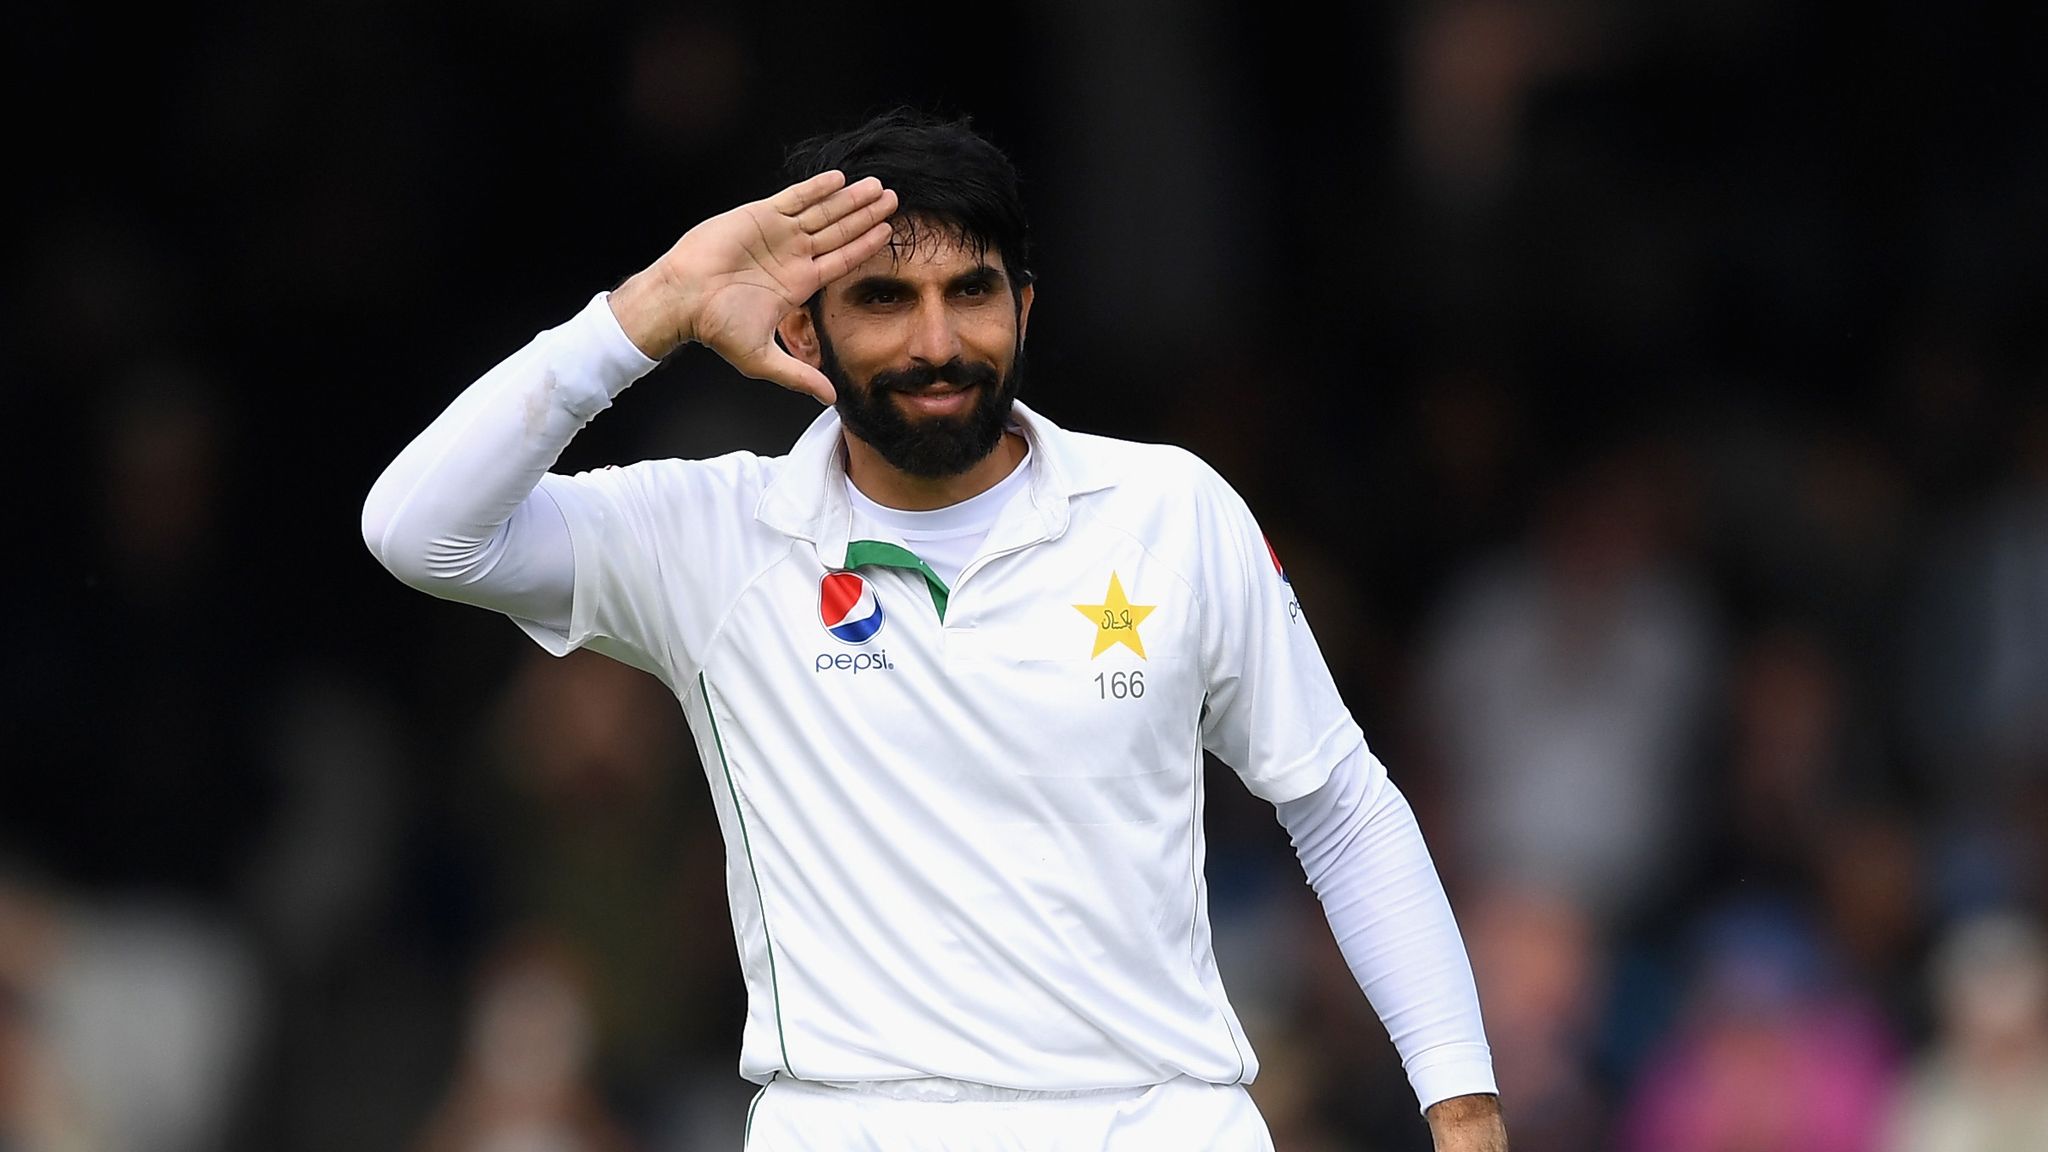 Sri Lanka to push 'harder' in Pakistan test